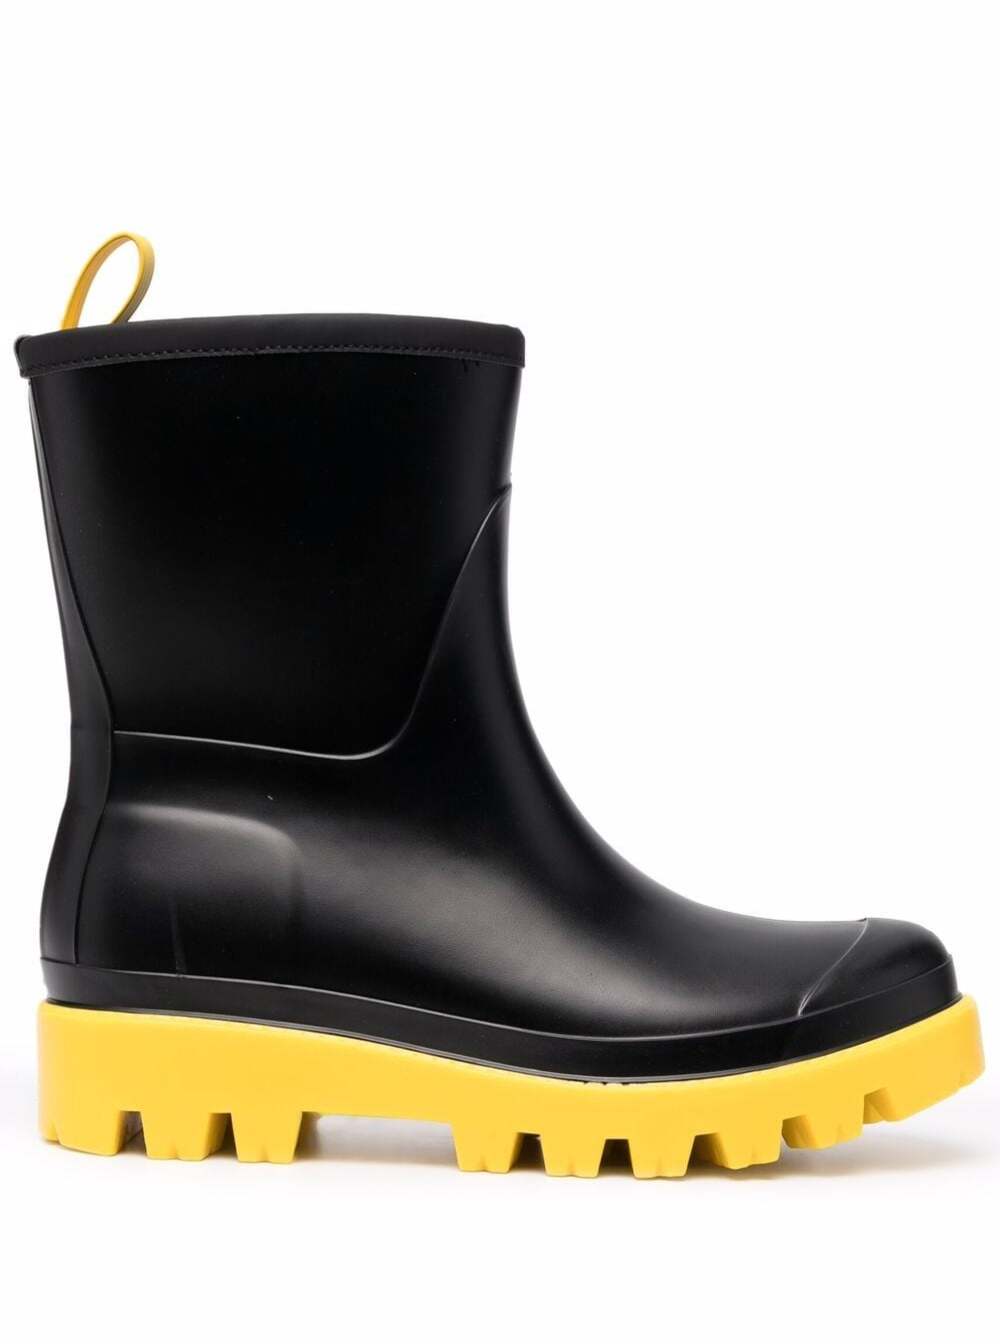 GIA BORGHINI Black Rubber Rain Boots With Yellow Sole